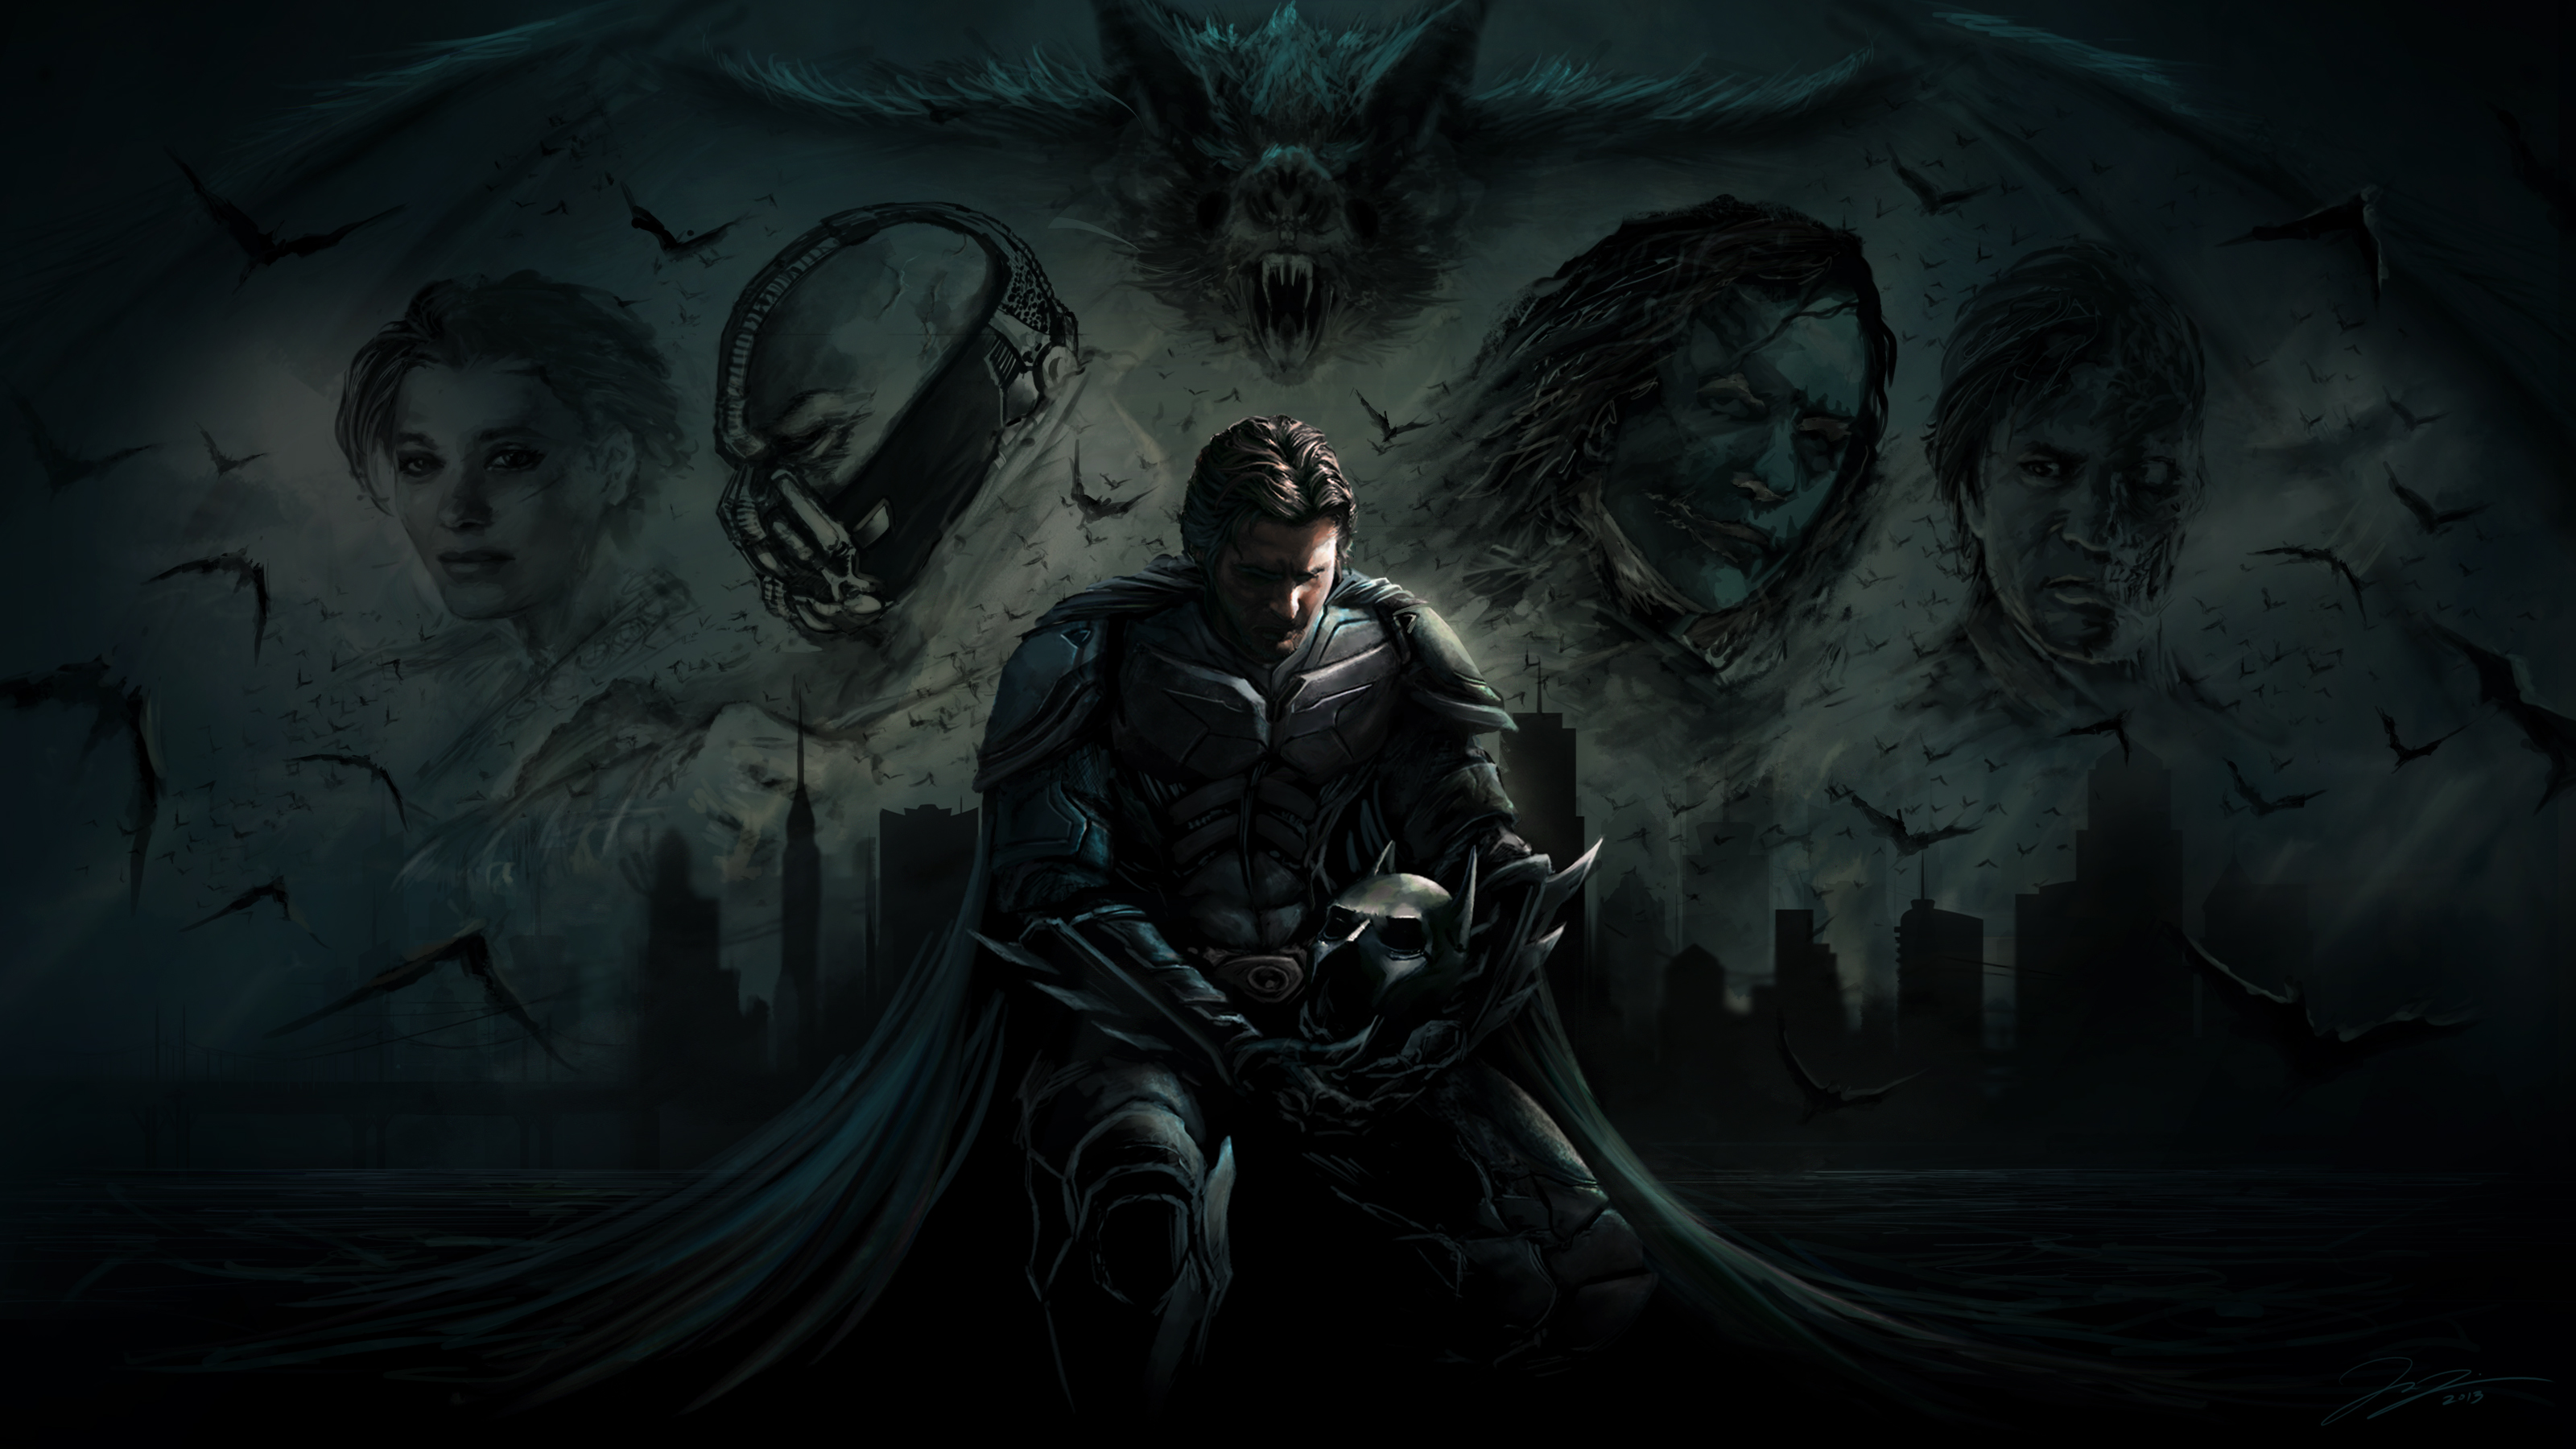 The Dark Knight Trilogy / Artwork by Leo Li